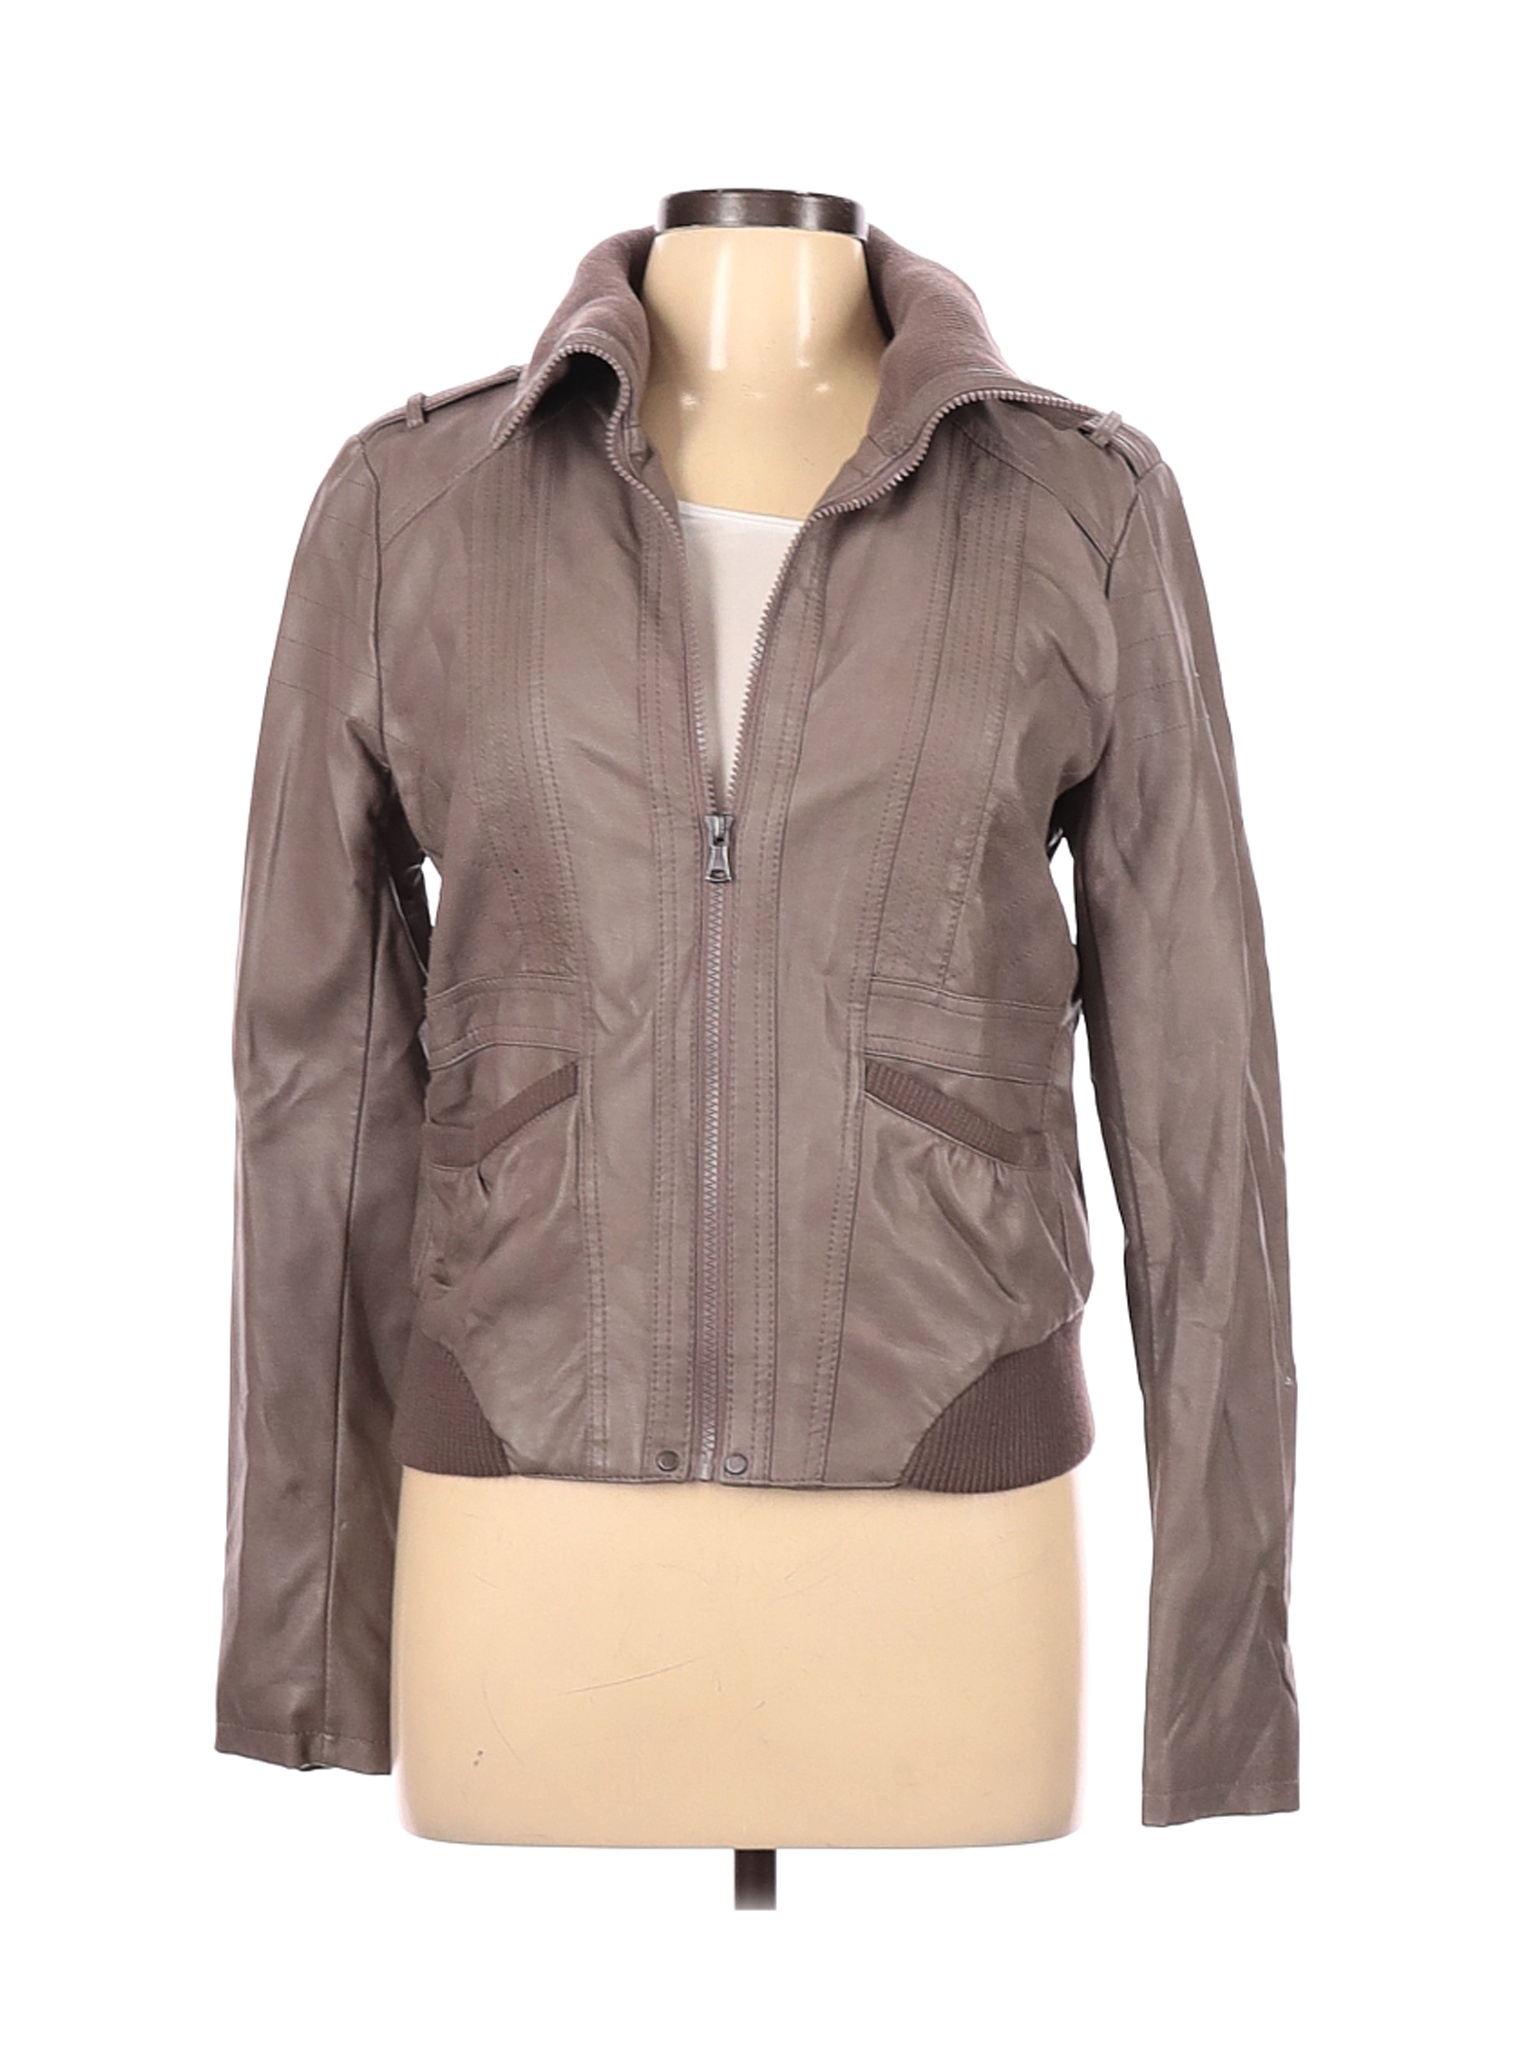 Xhilaration Women Brown Faux Leather Jacket L | eBay